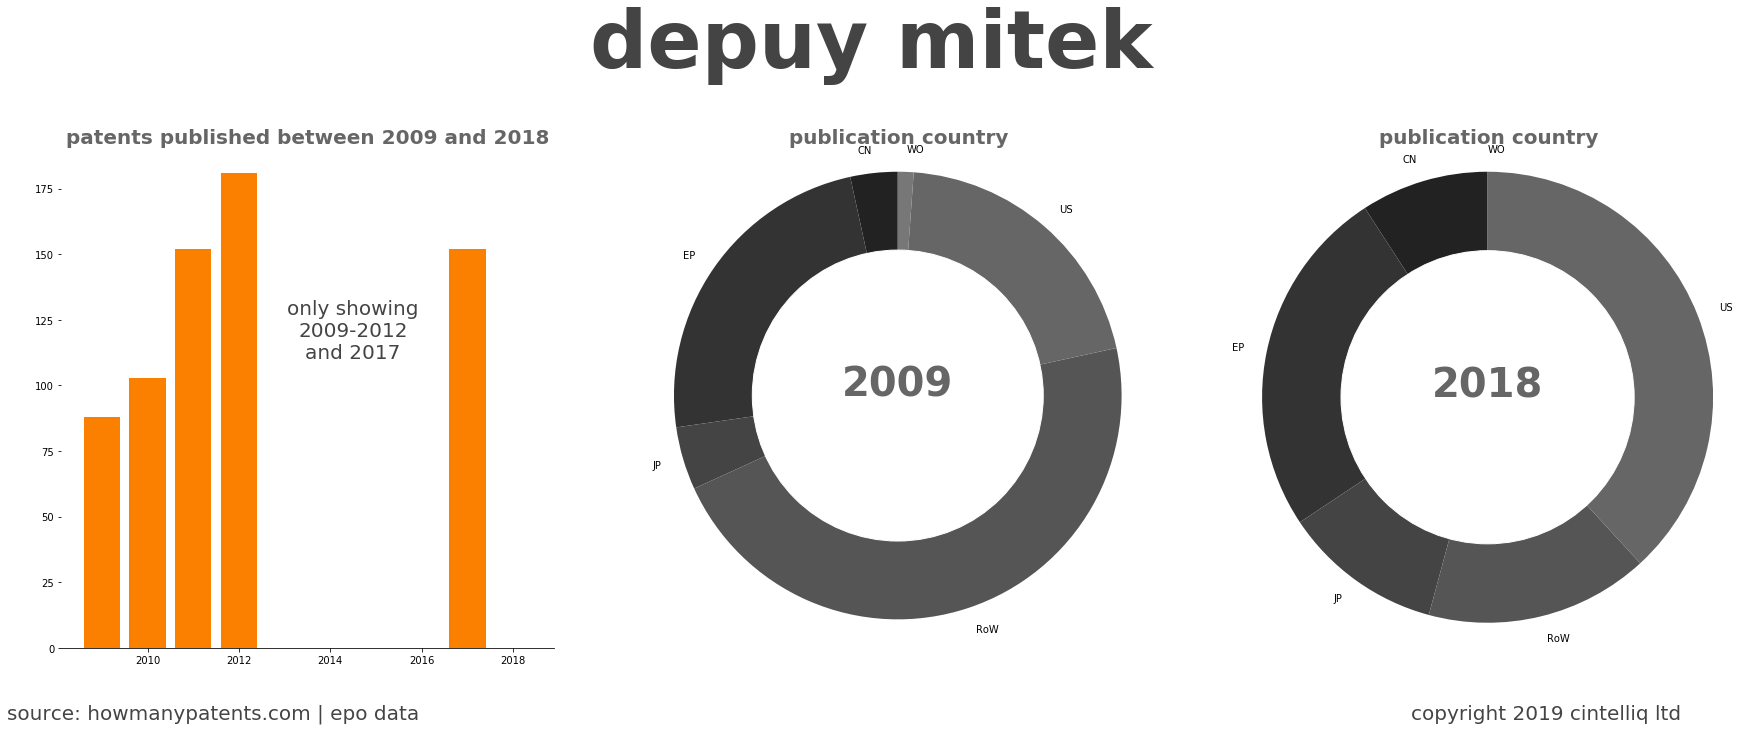 summary of patents for Depuy Mitek